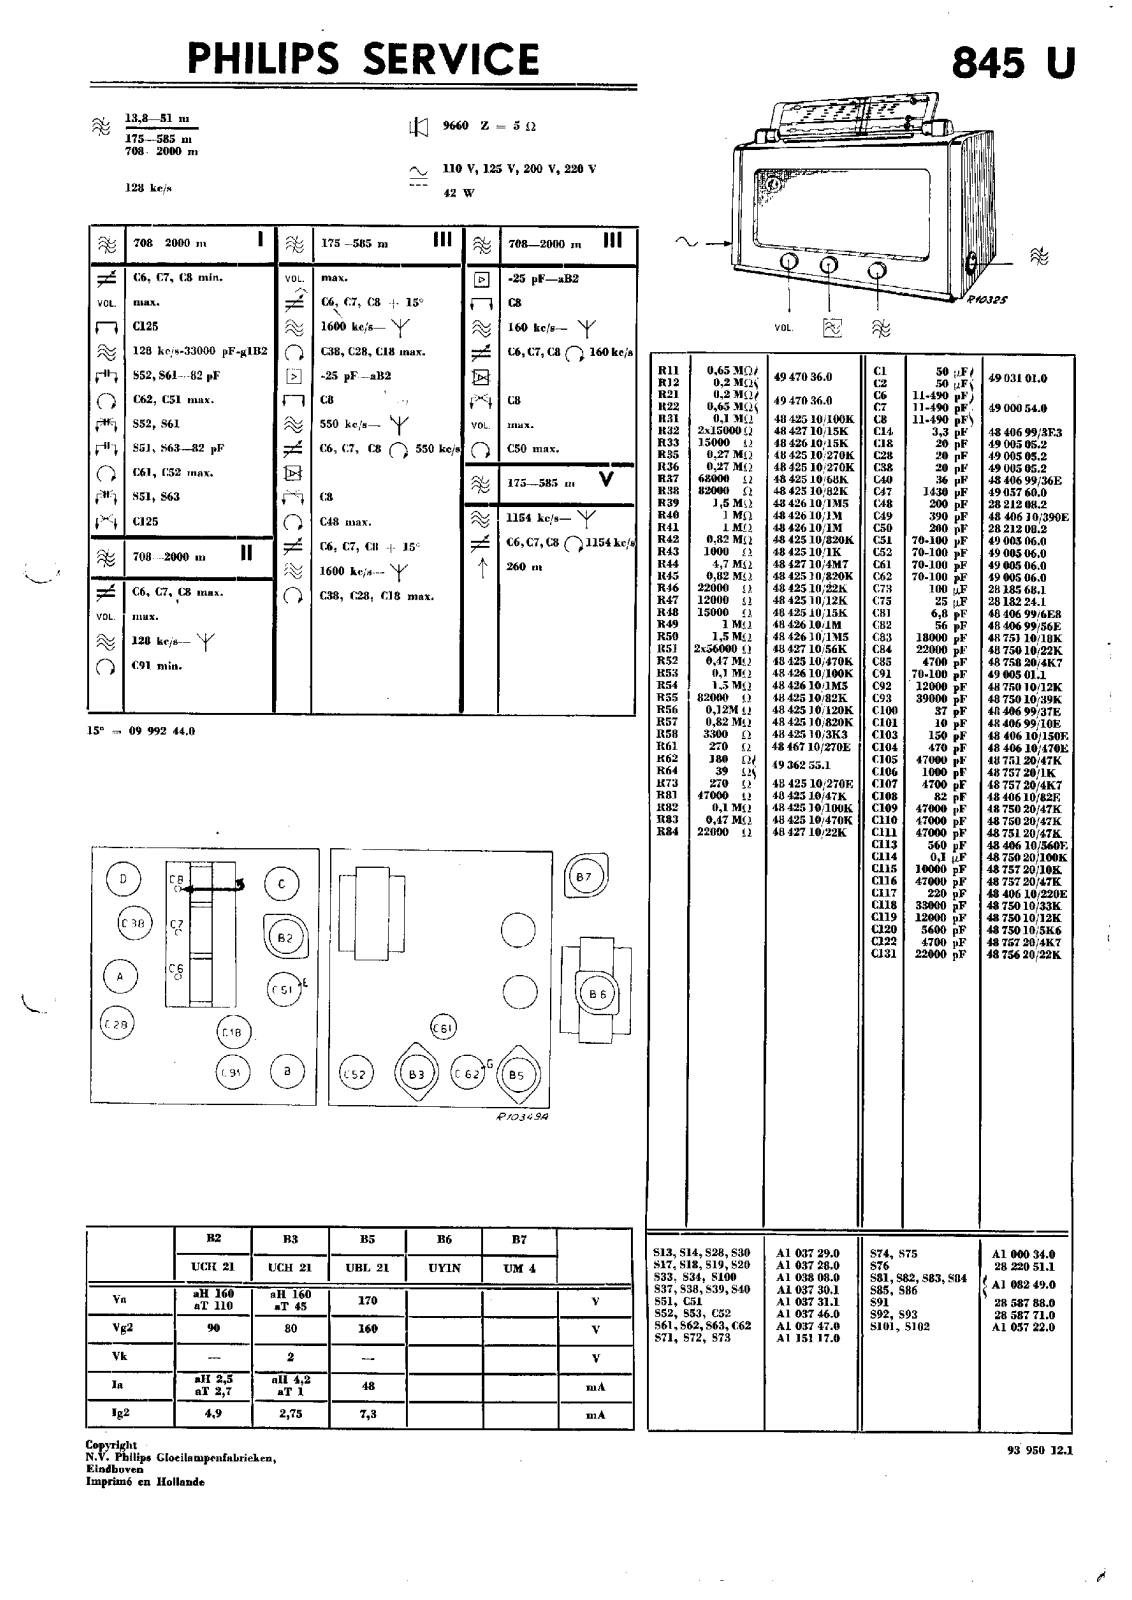 Philips 845-U Service Manual